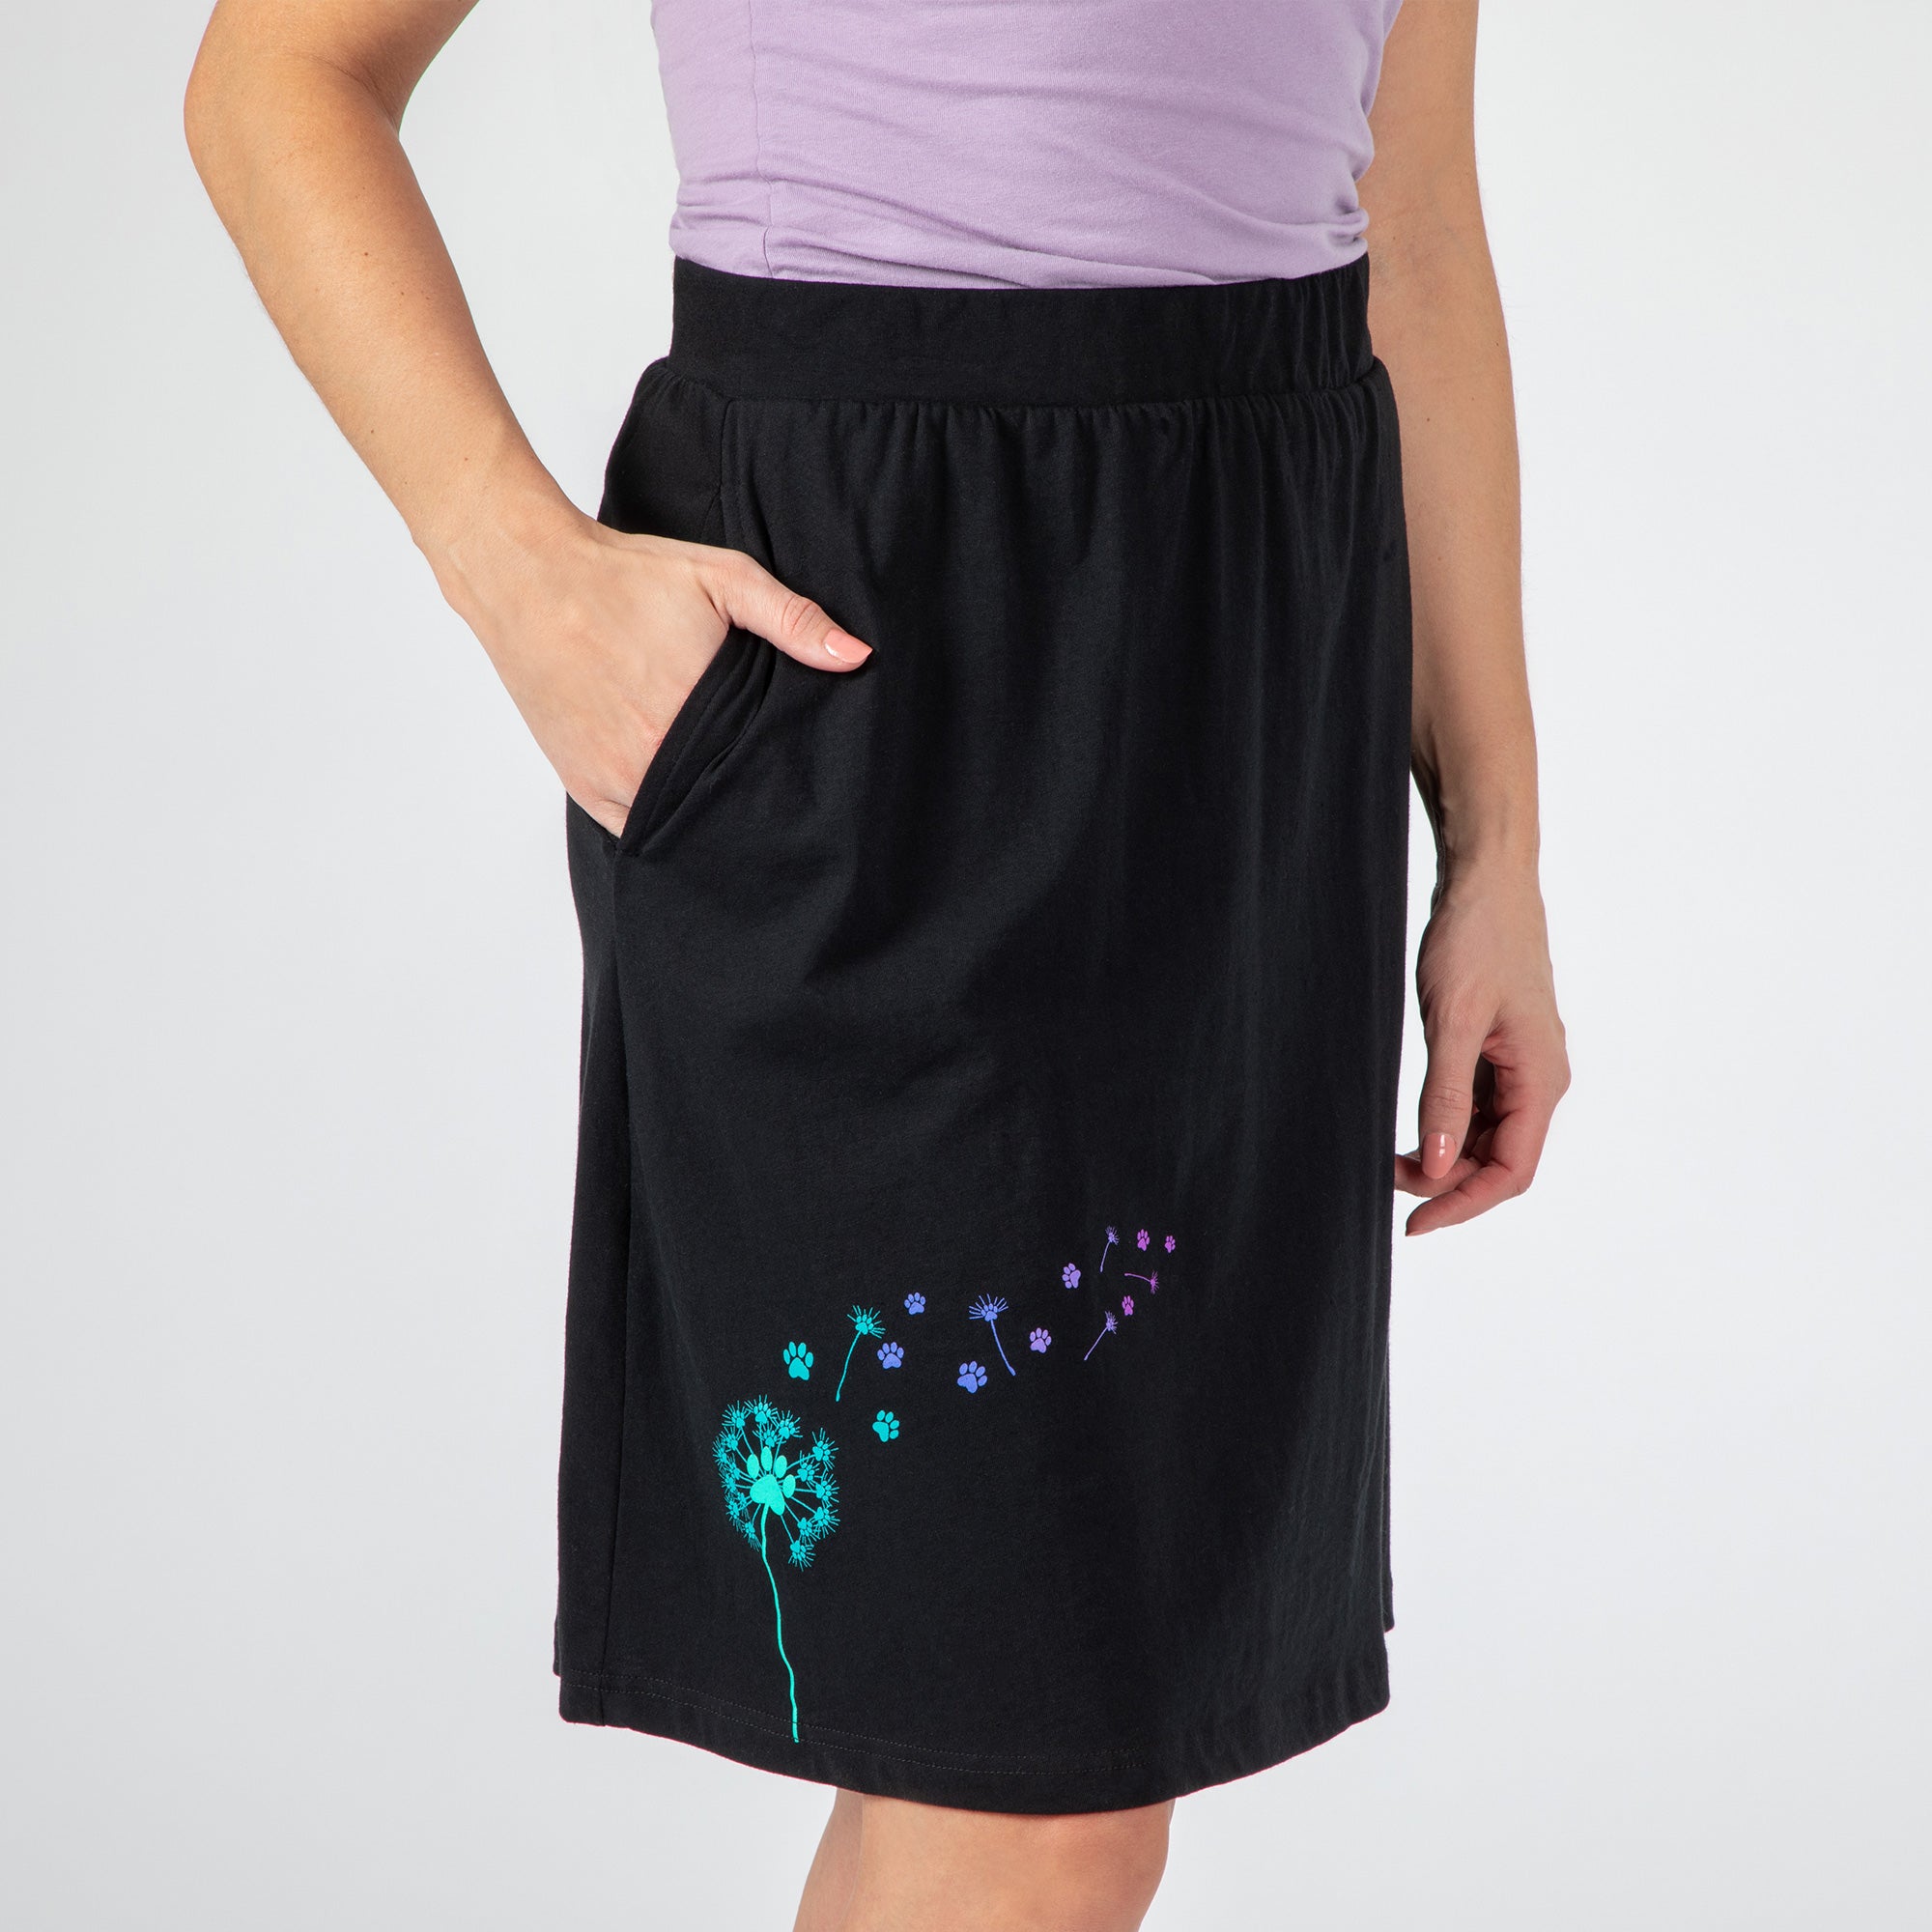 Dandelion Paw Print A-Line Skirt - 1X